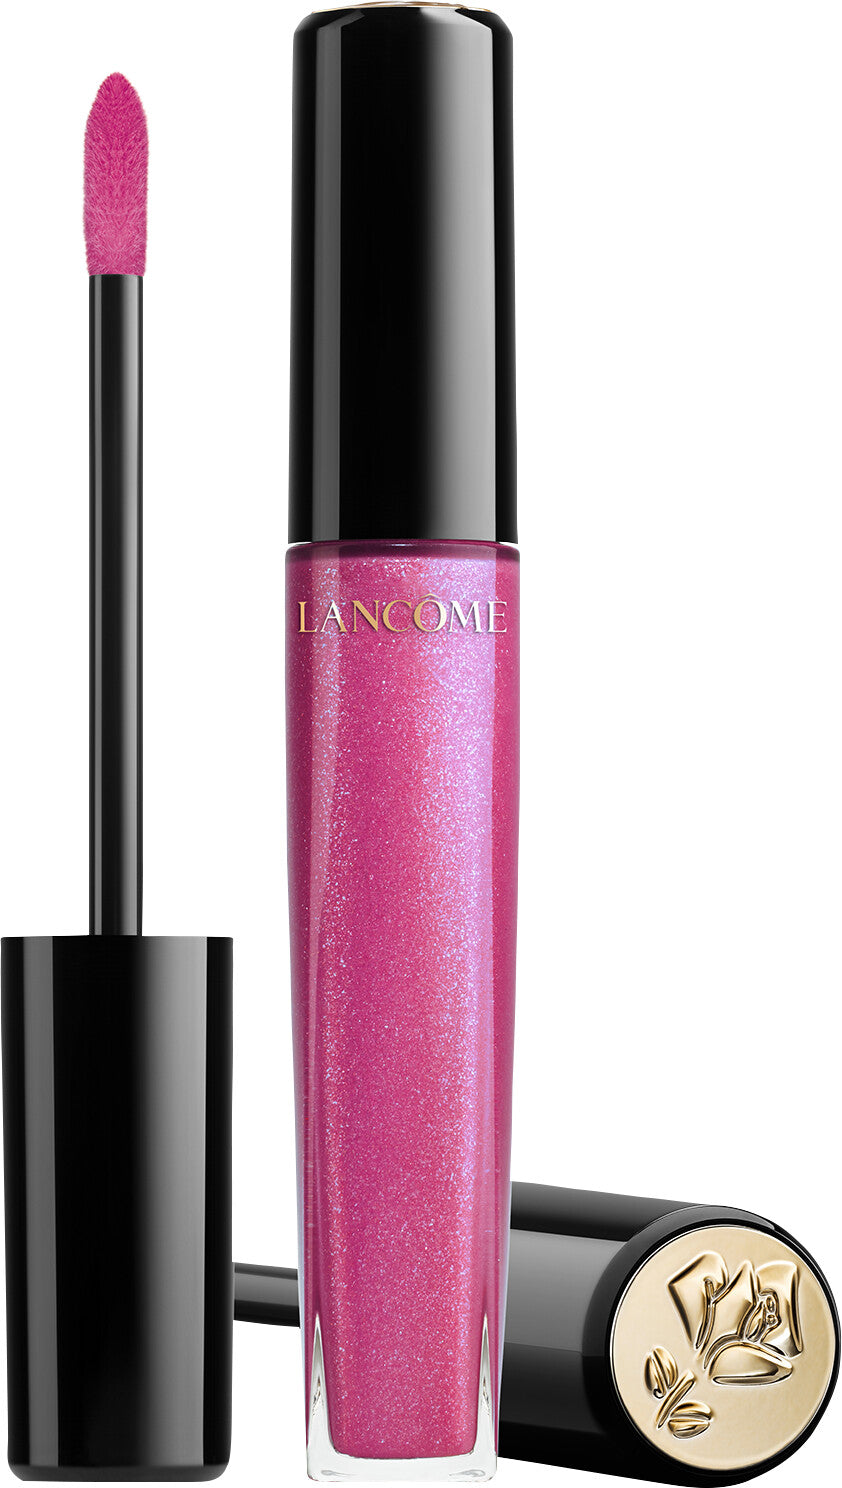 Lancome L'Absolu Gloss Sheer Pink Lip Gloss 383 Premier Baiser